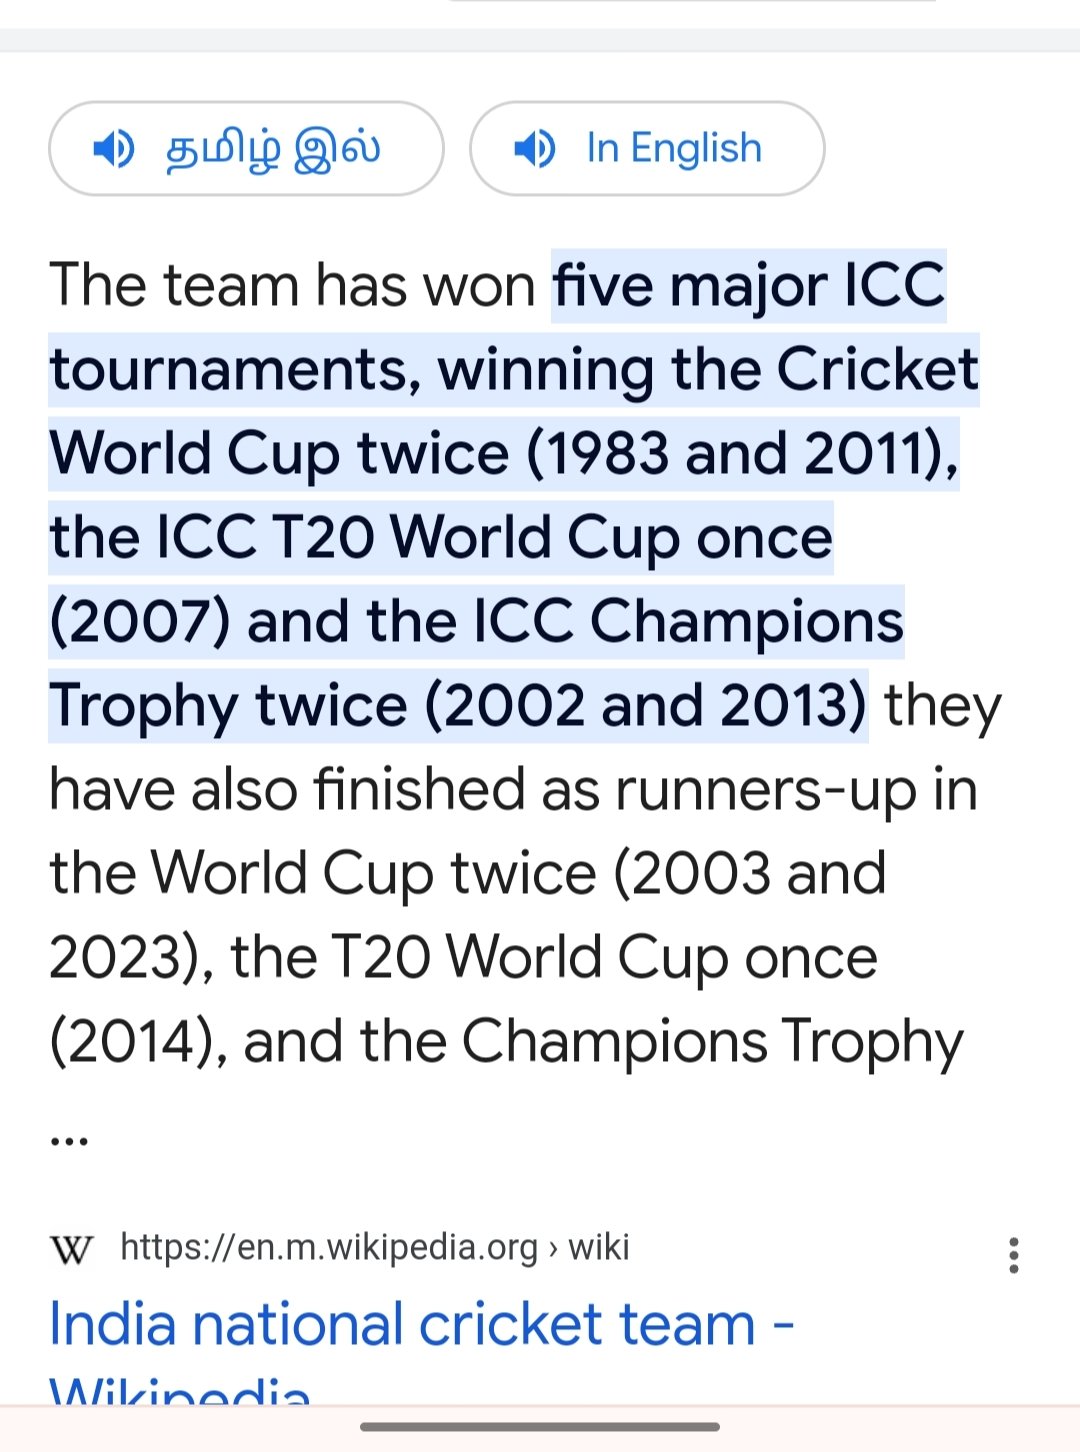 England cricket team - Wikipedia